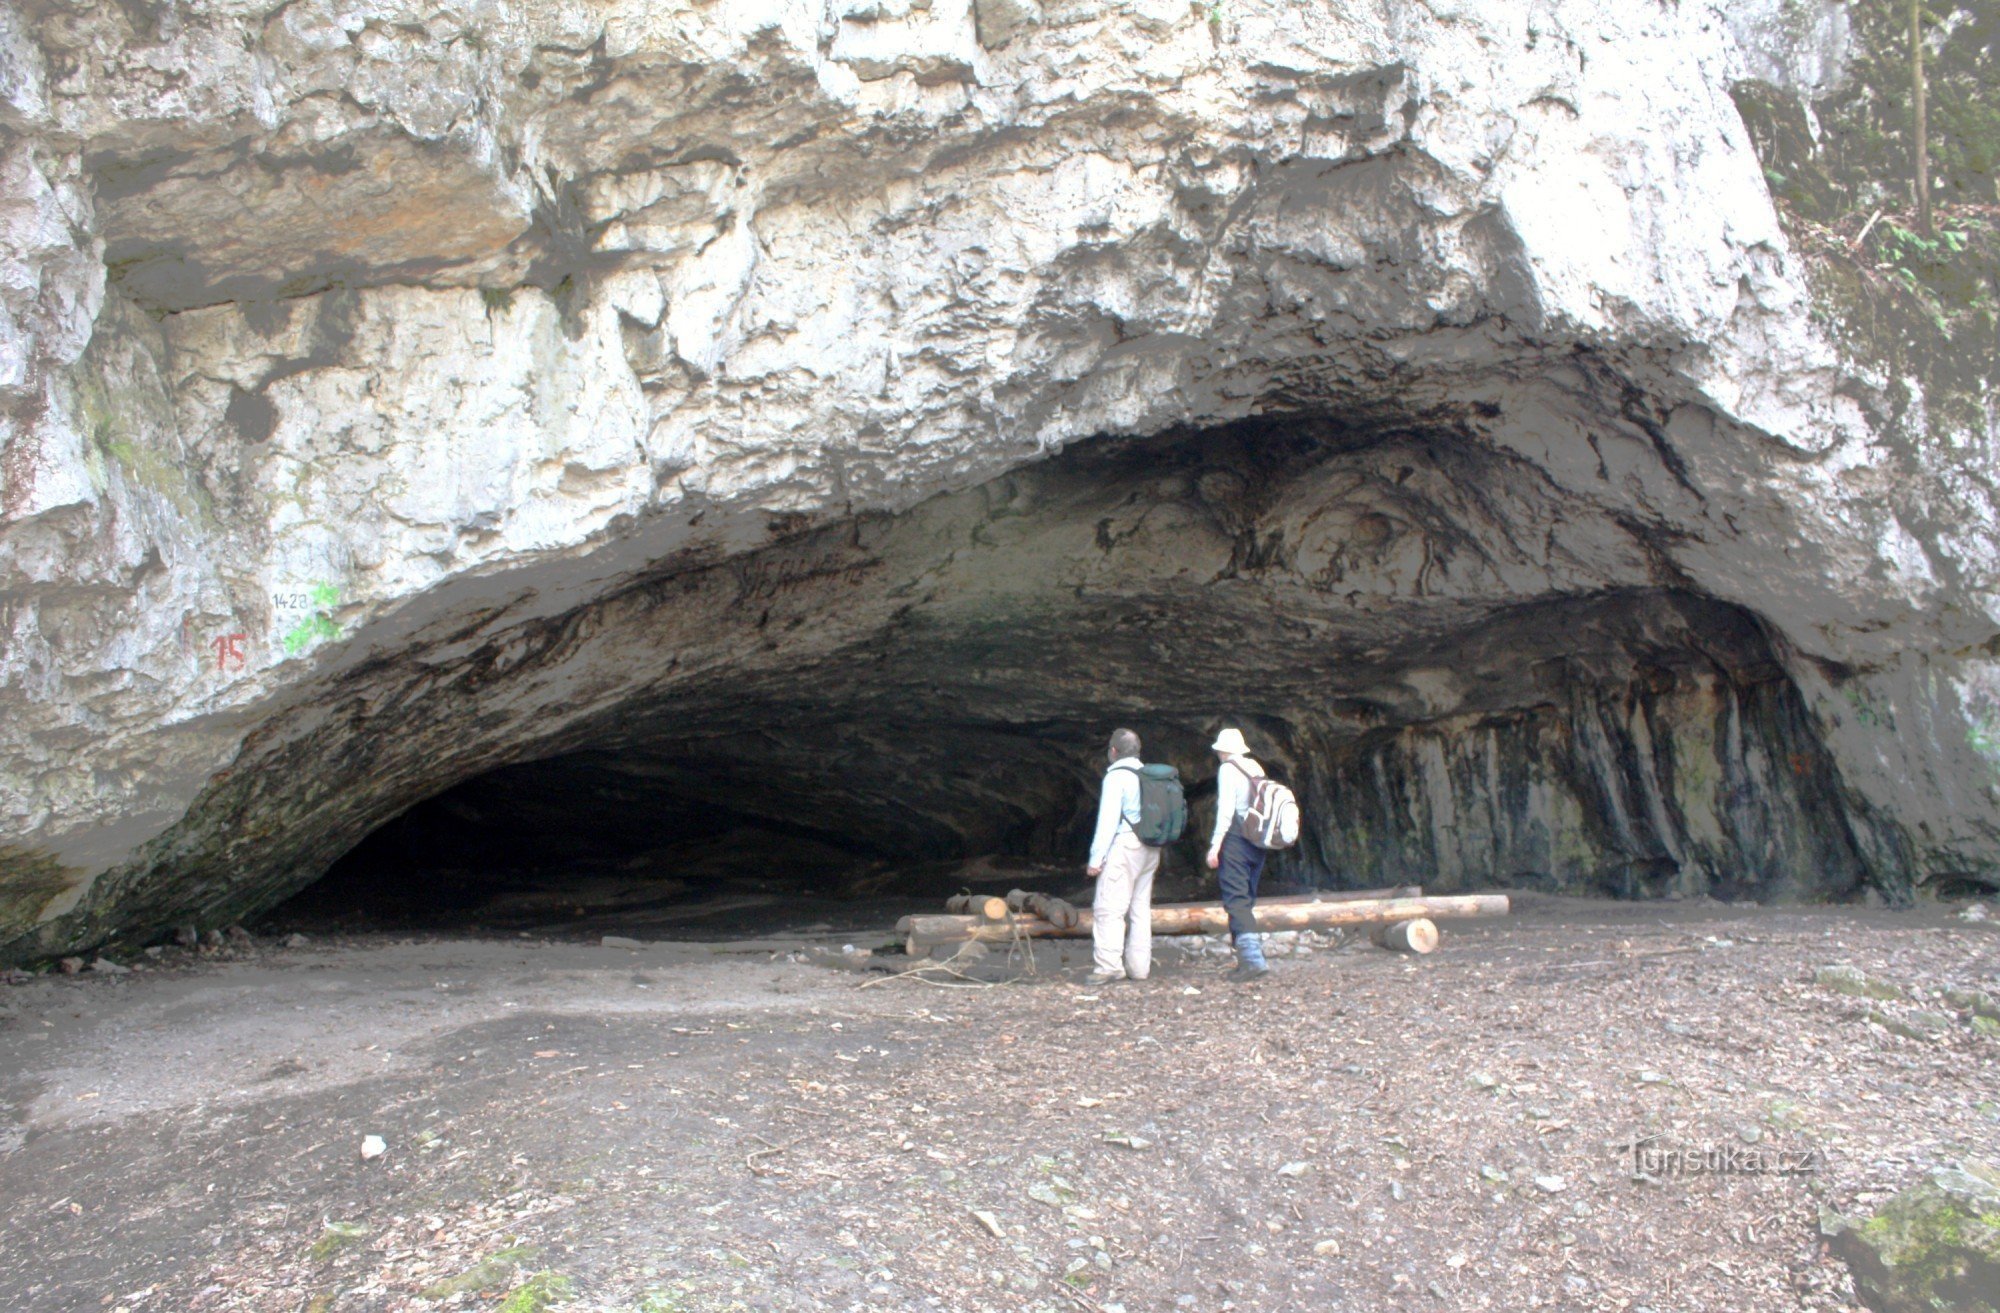 Indgangsportalen til Pekárny-grotten